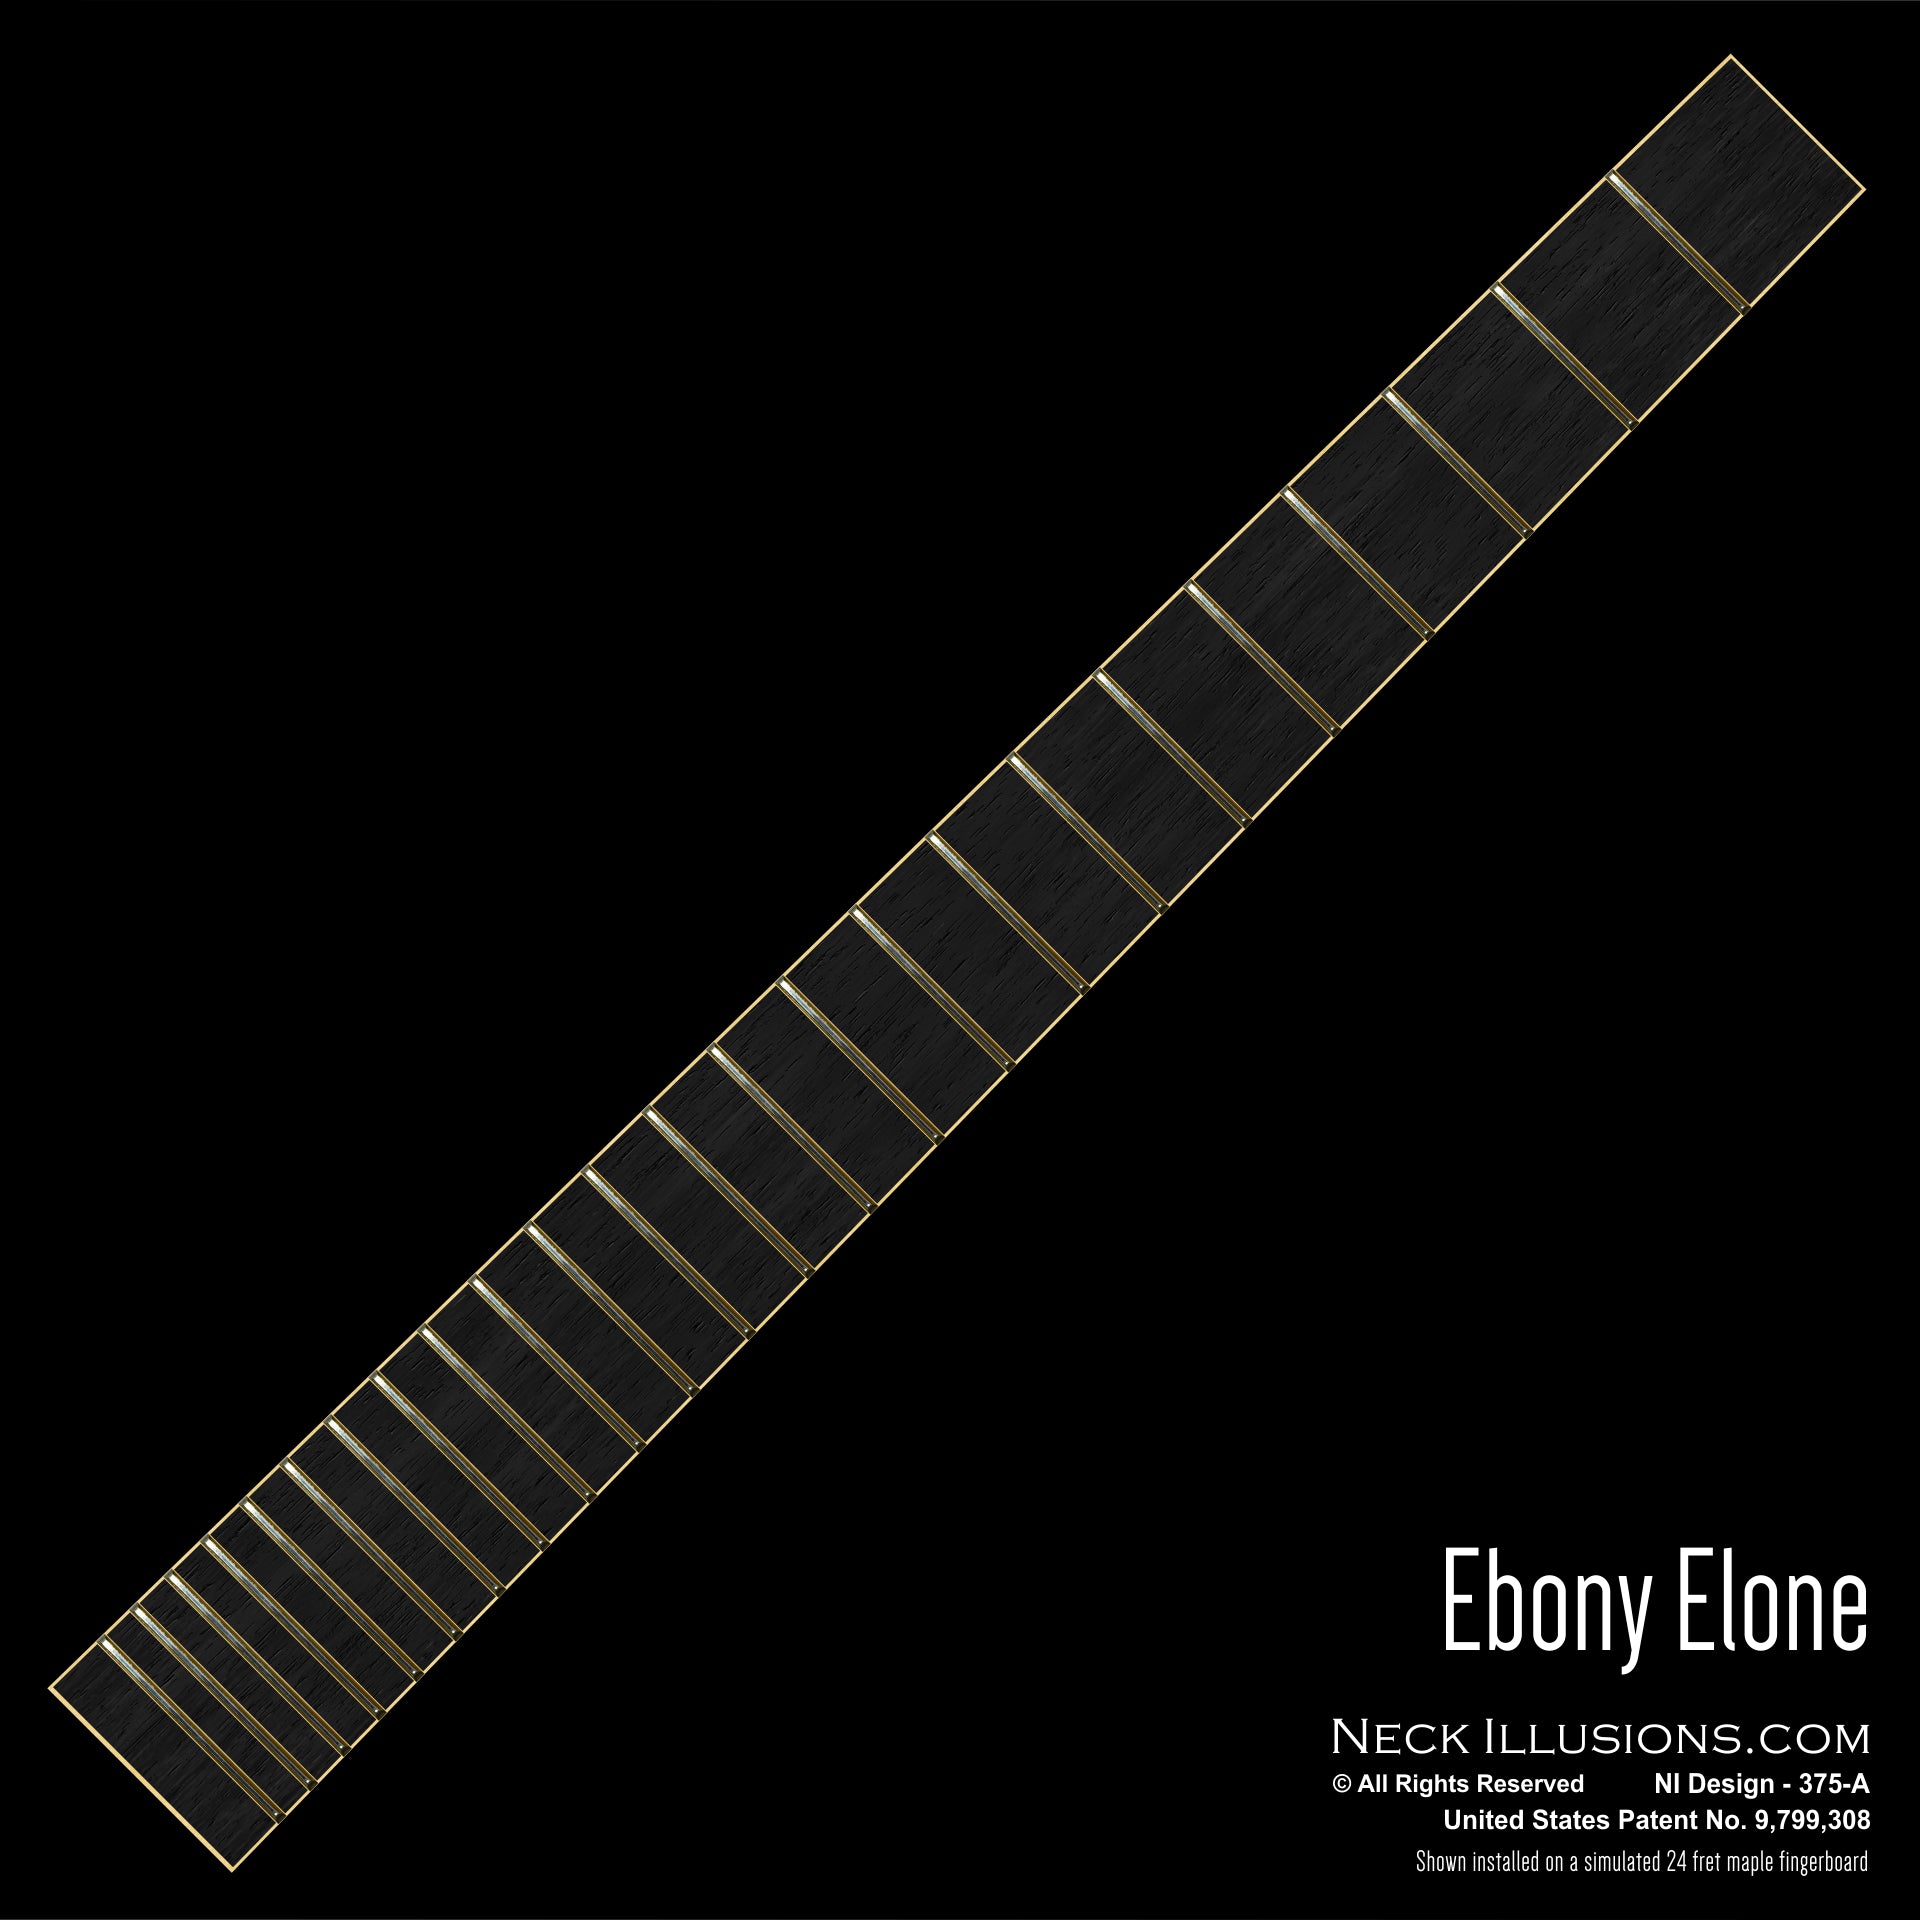 Ebony Elone